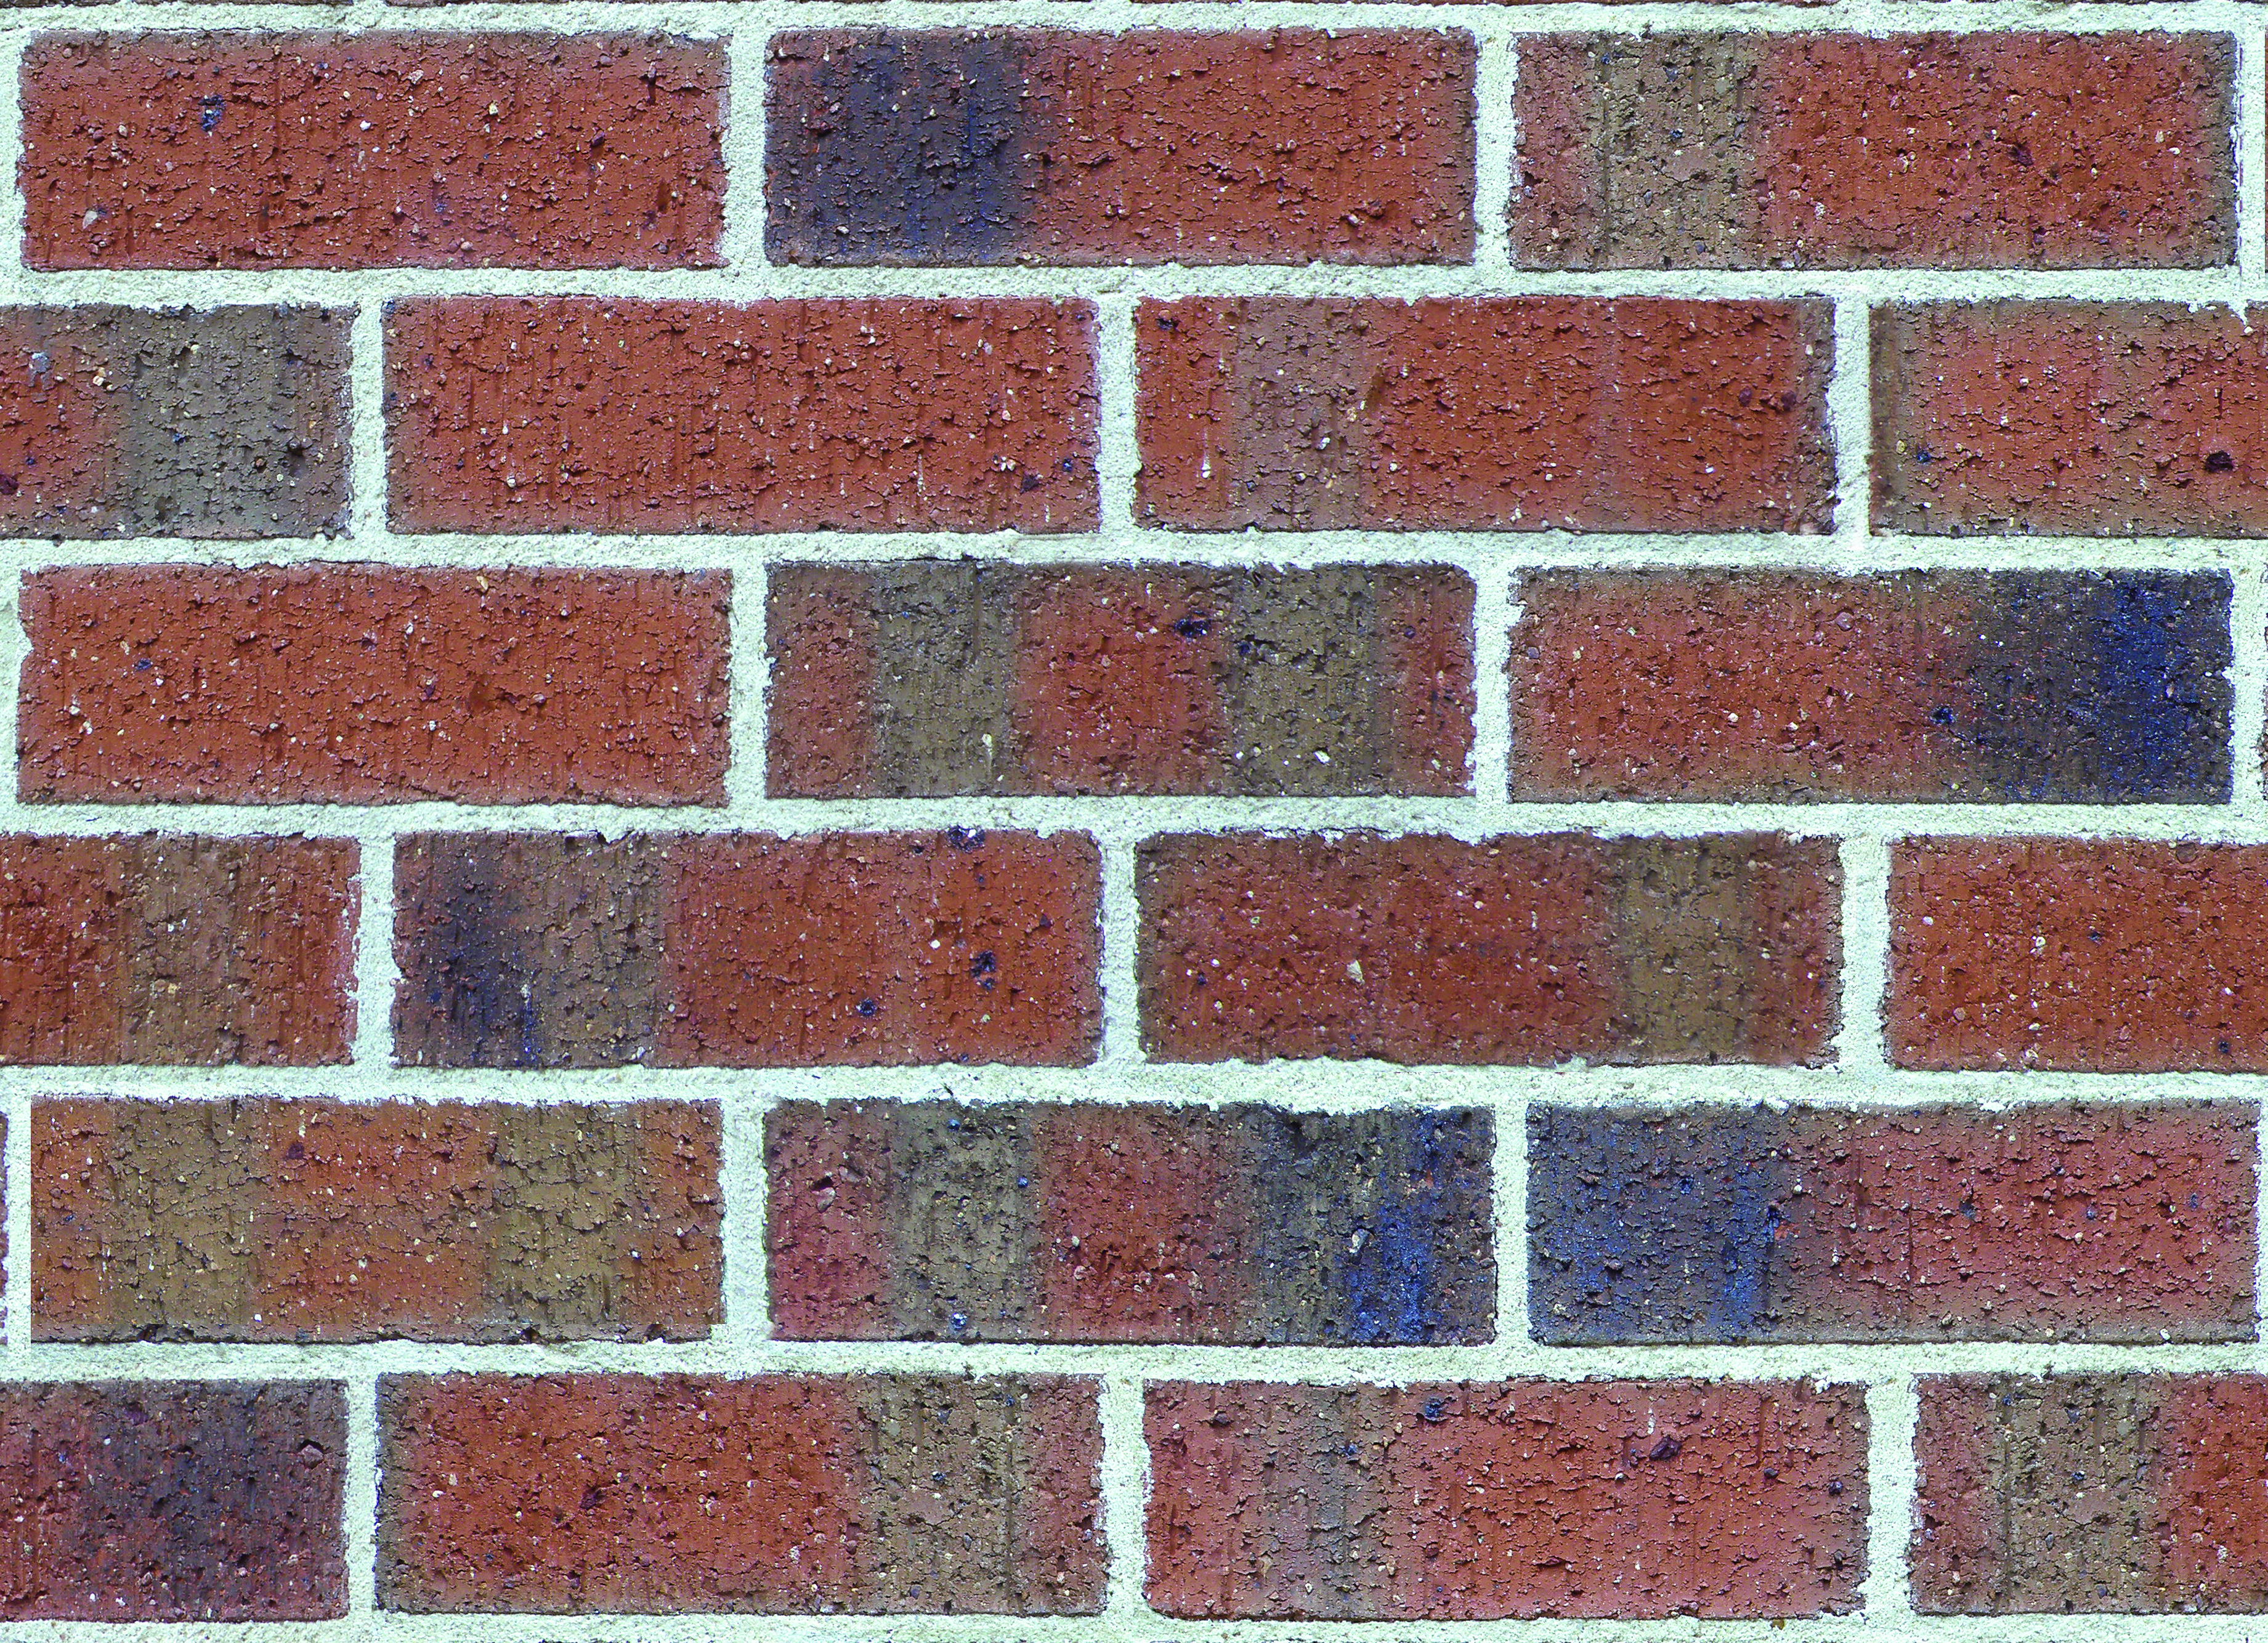 Melbourne Series Bricks - Austral Bricks, National Manufacturer